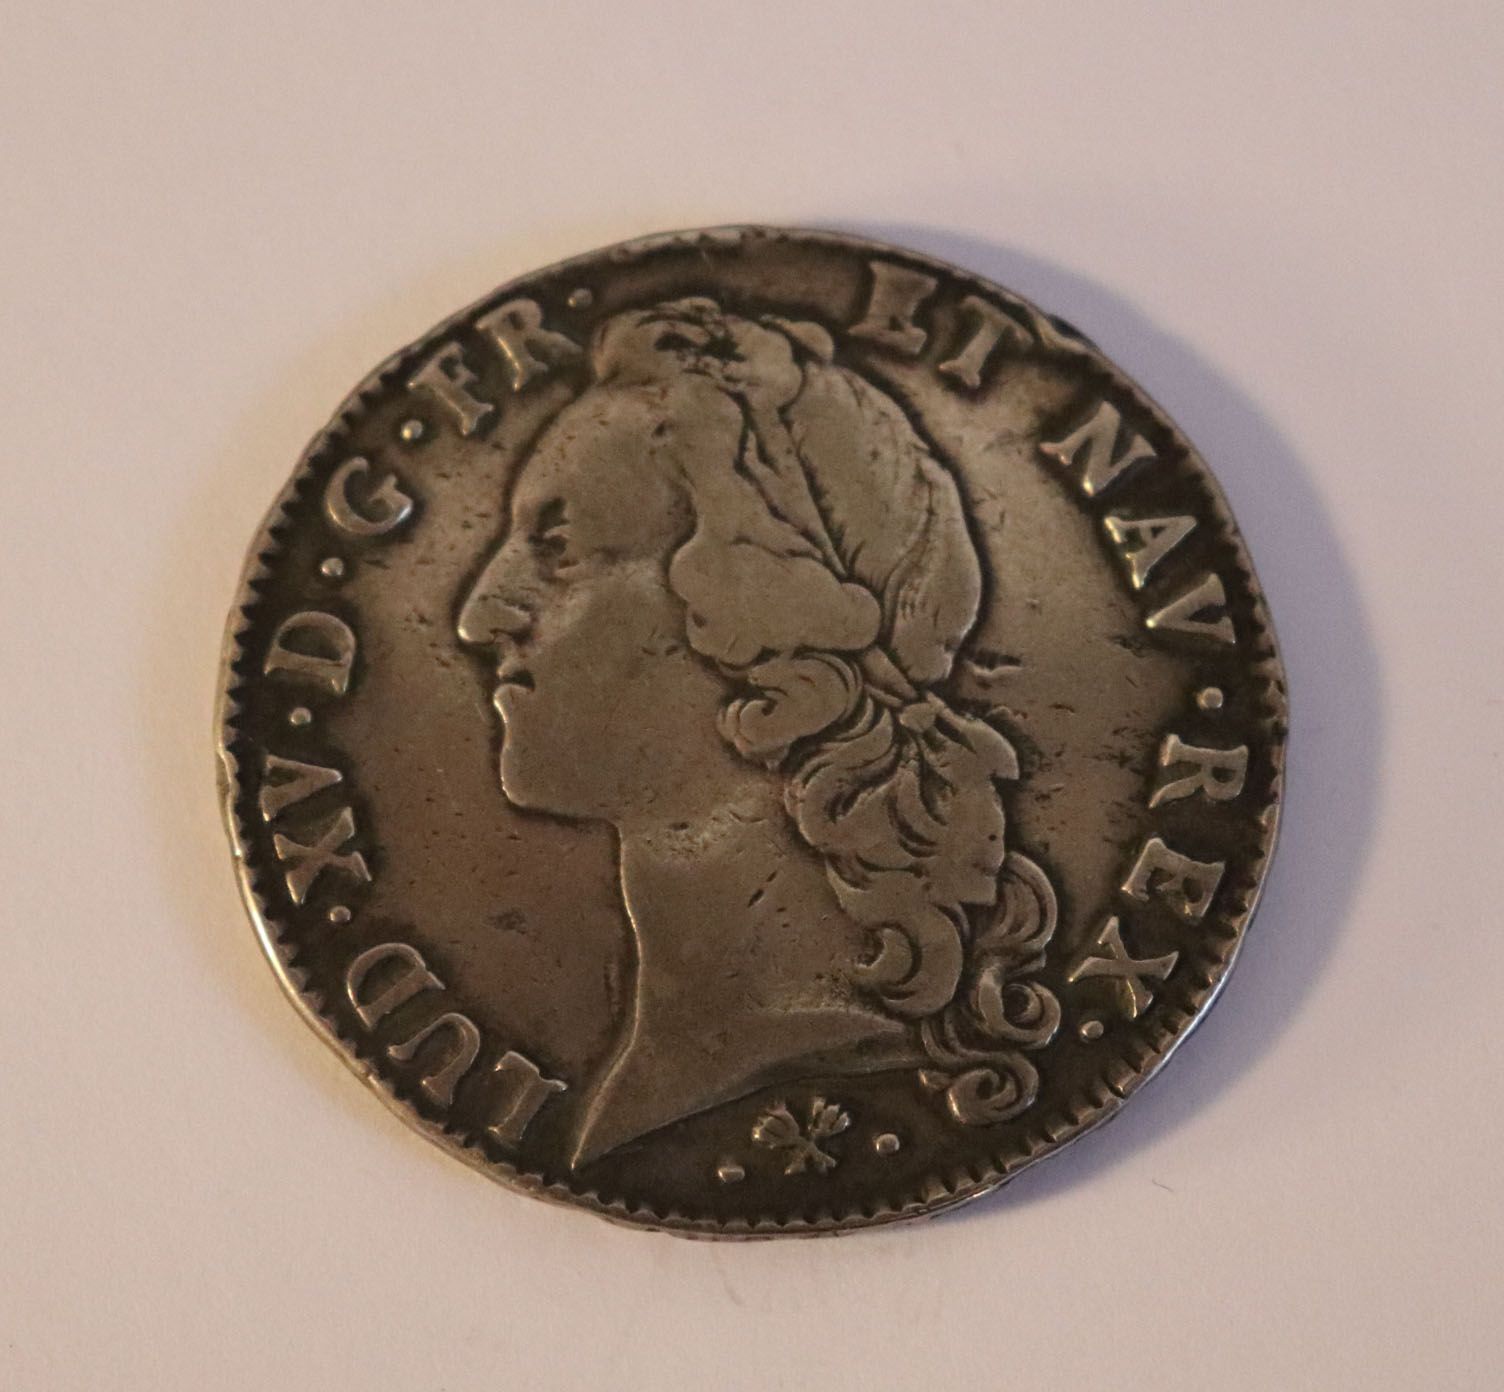 Null Ludwig XV, Schild mit Band 1768 L = Bayonne. Dy.1680

Gewicht: 28,9 g